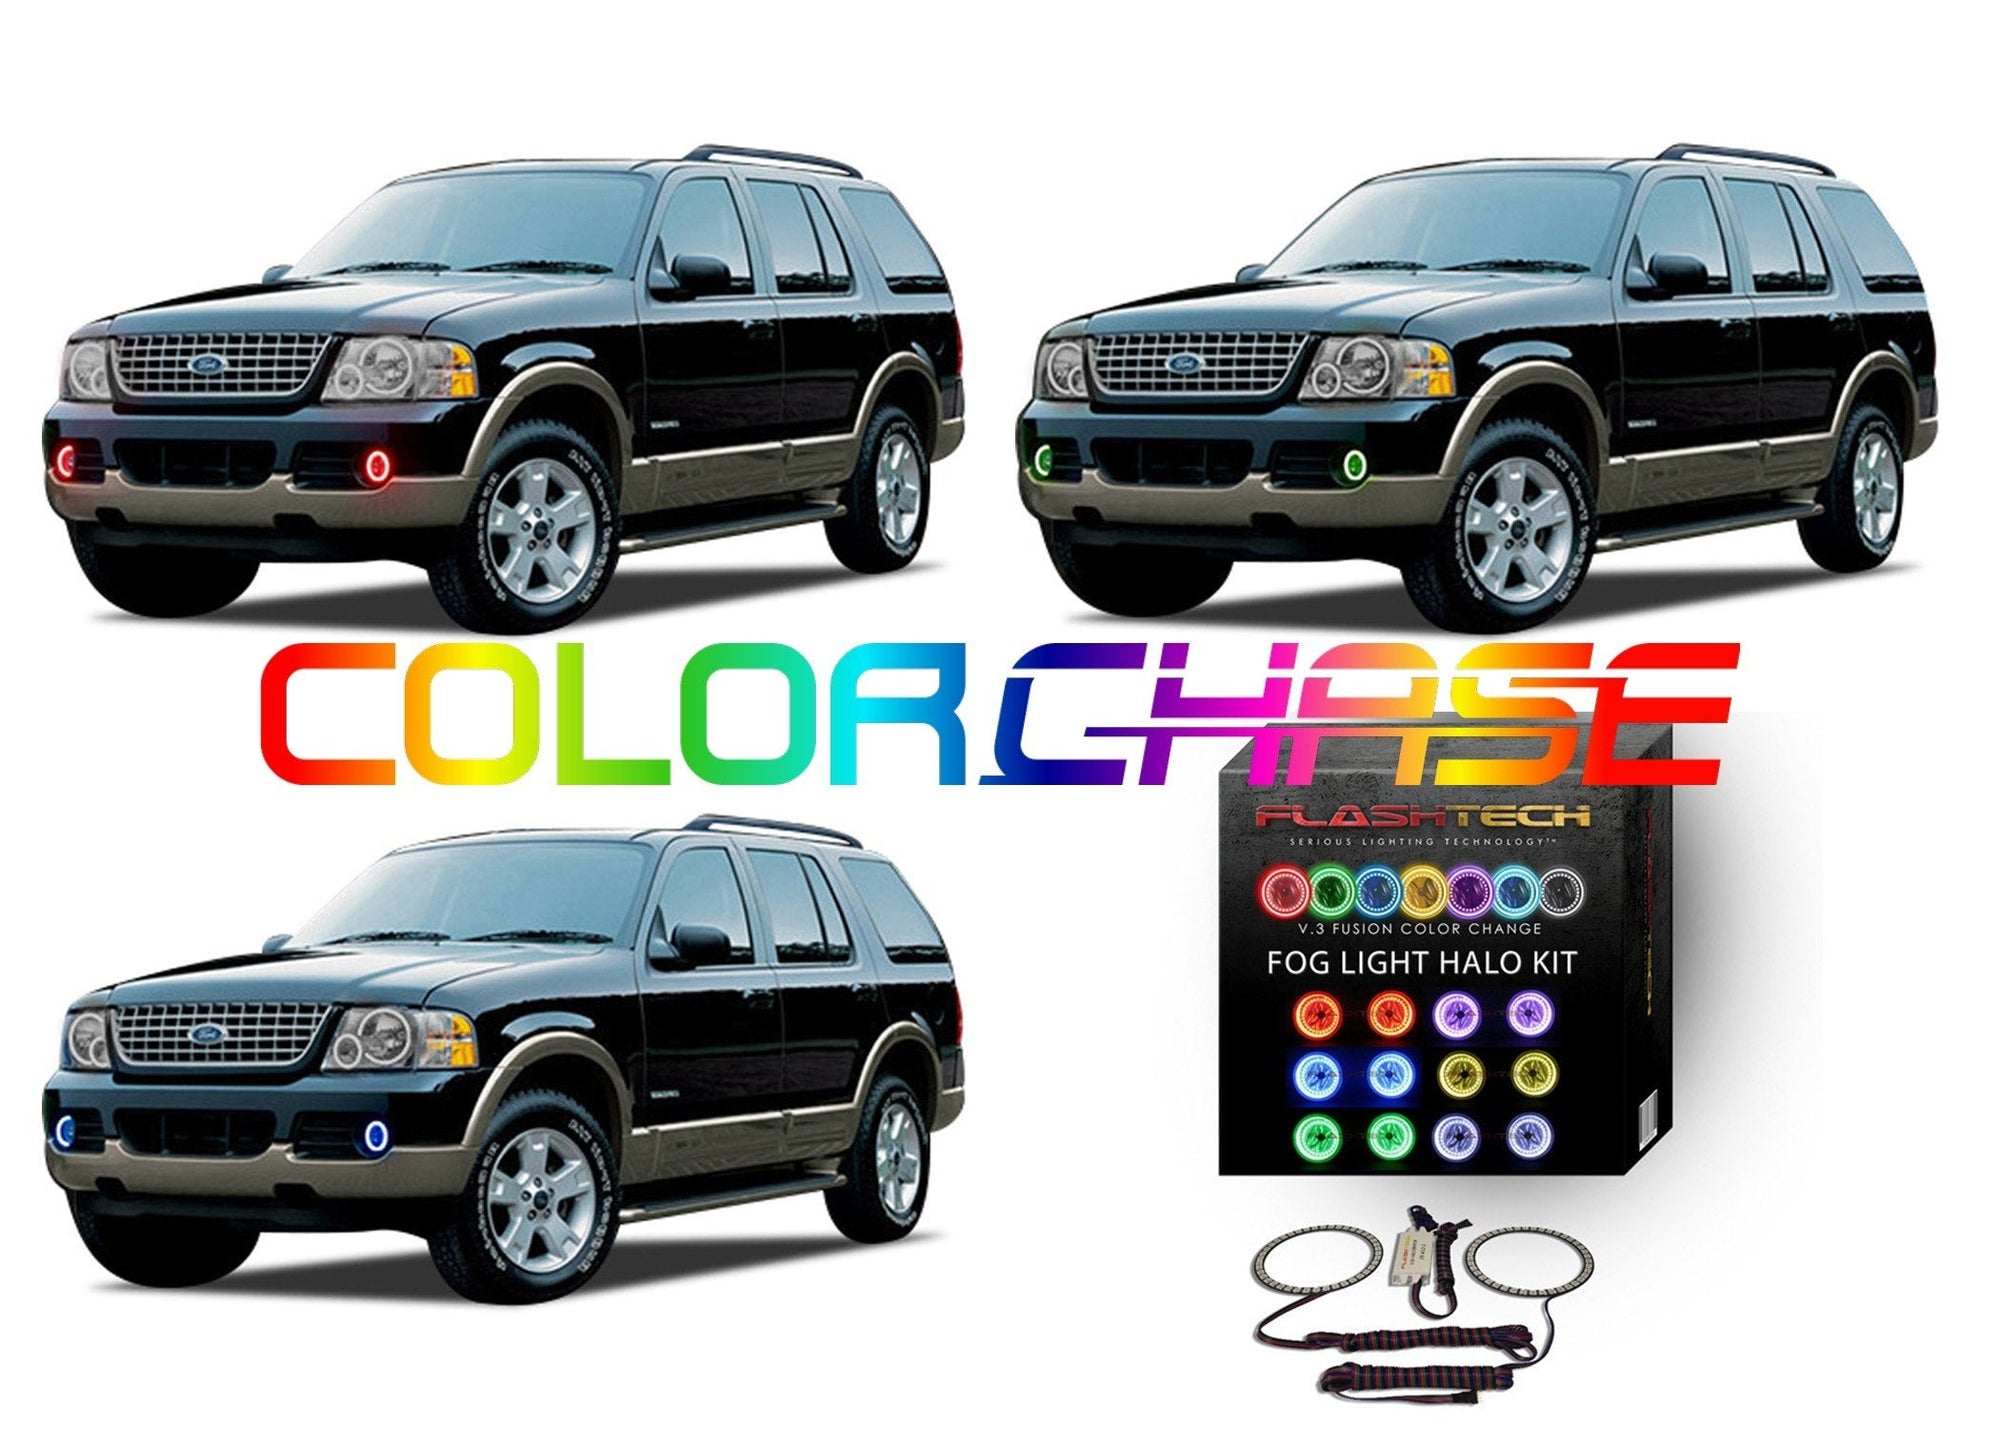 Ford Explorer ColorChase LED Halo Fog Light Kit 2002-2005